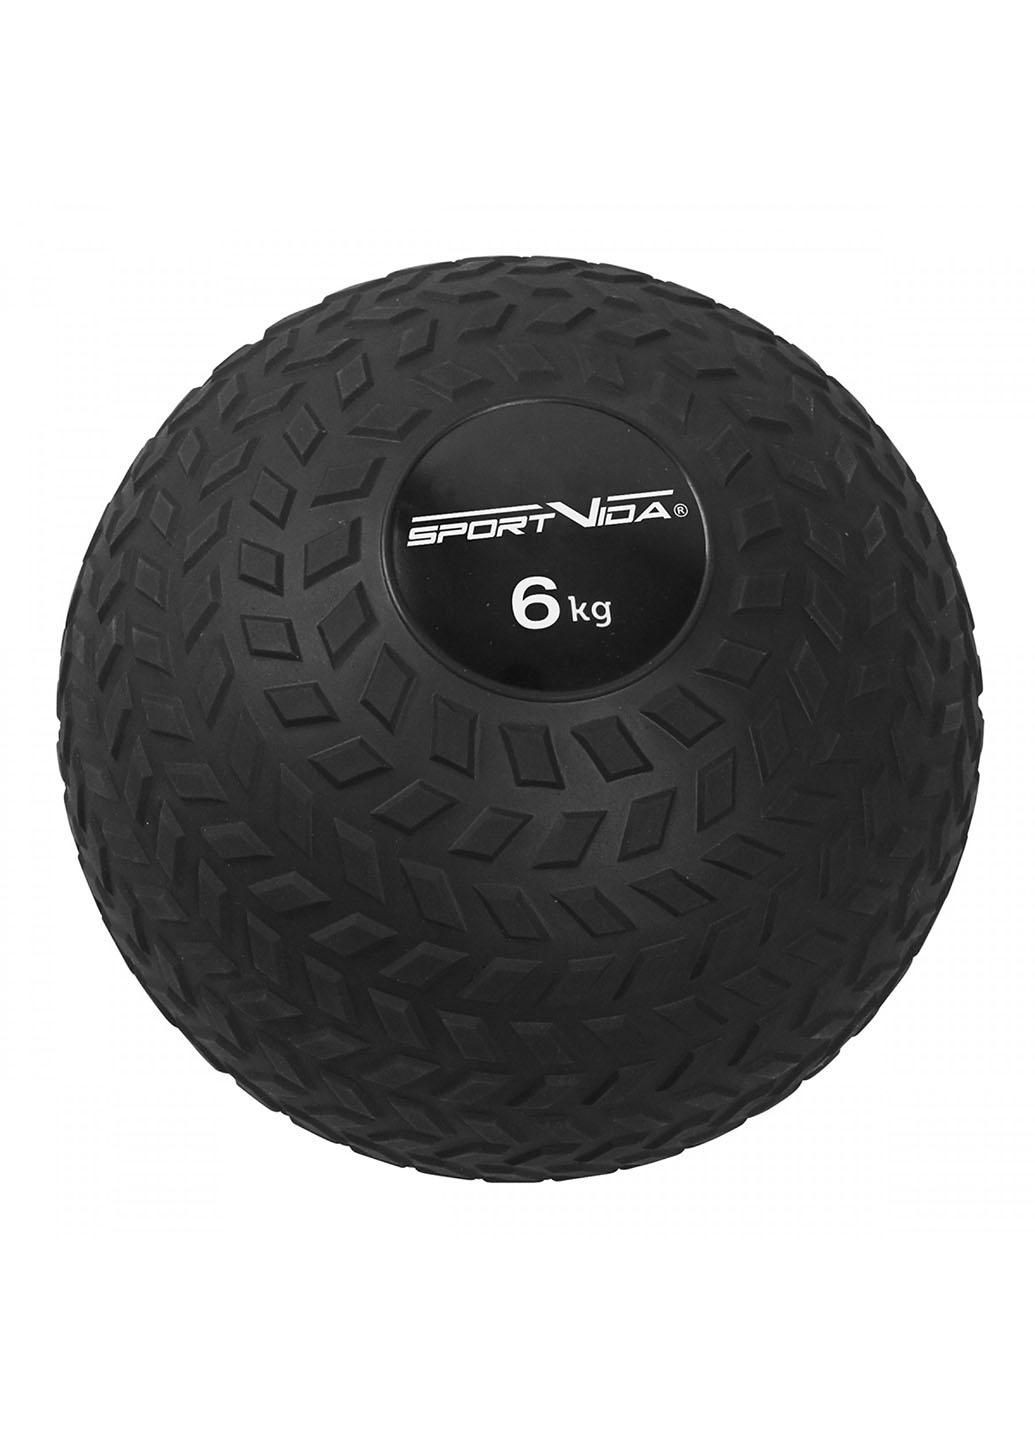 Слембол (медичний м'яч) для кросфіту Slam Ball 6 кг SV-HK0348 Black SportVida (279303124)